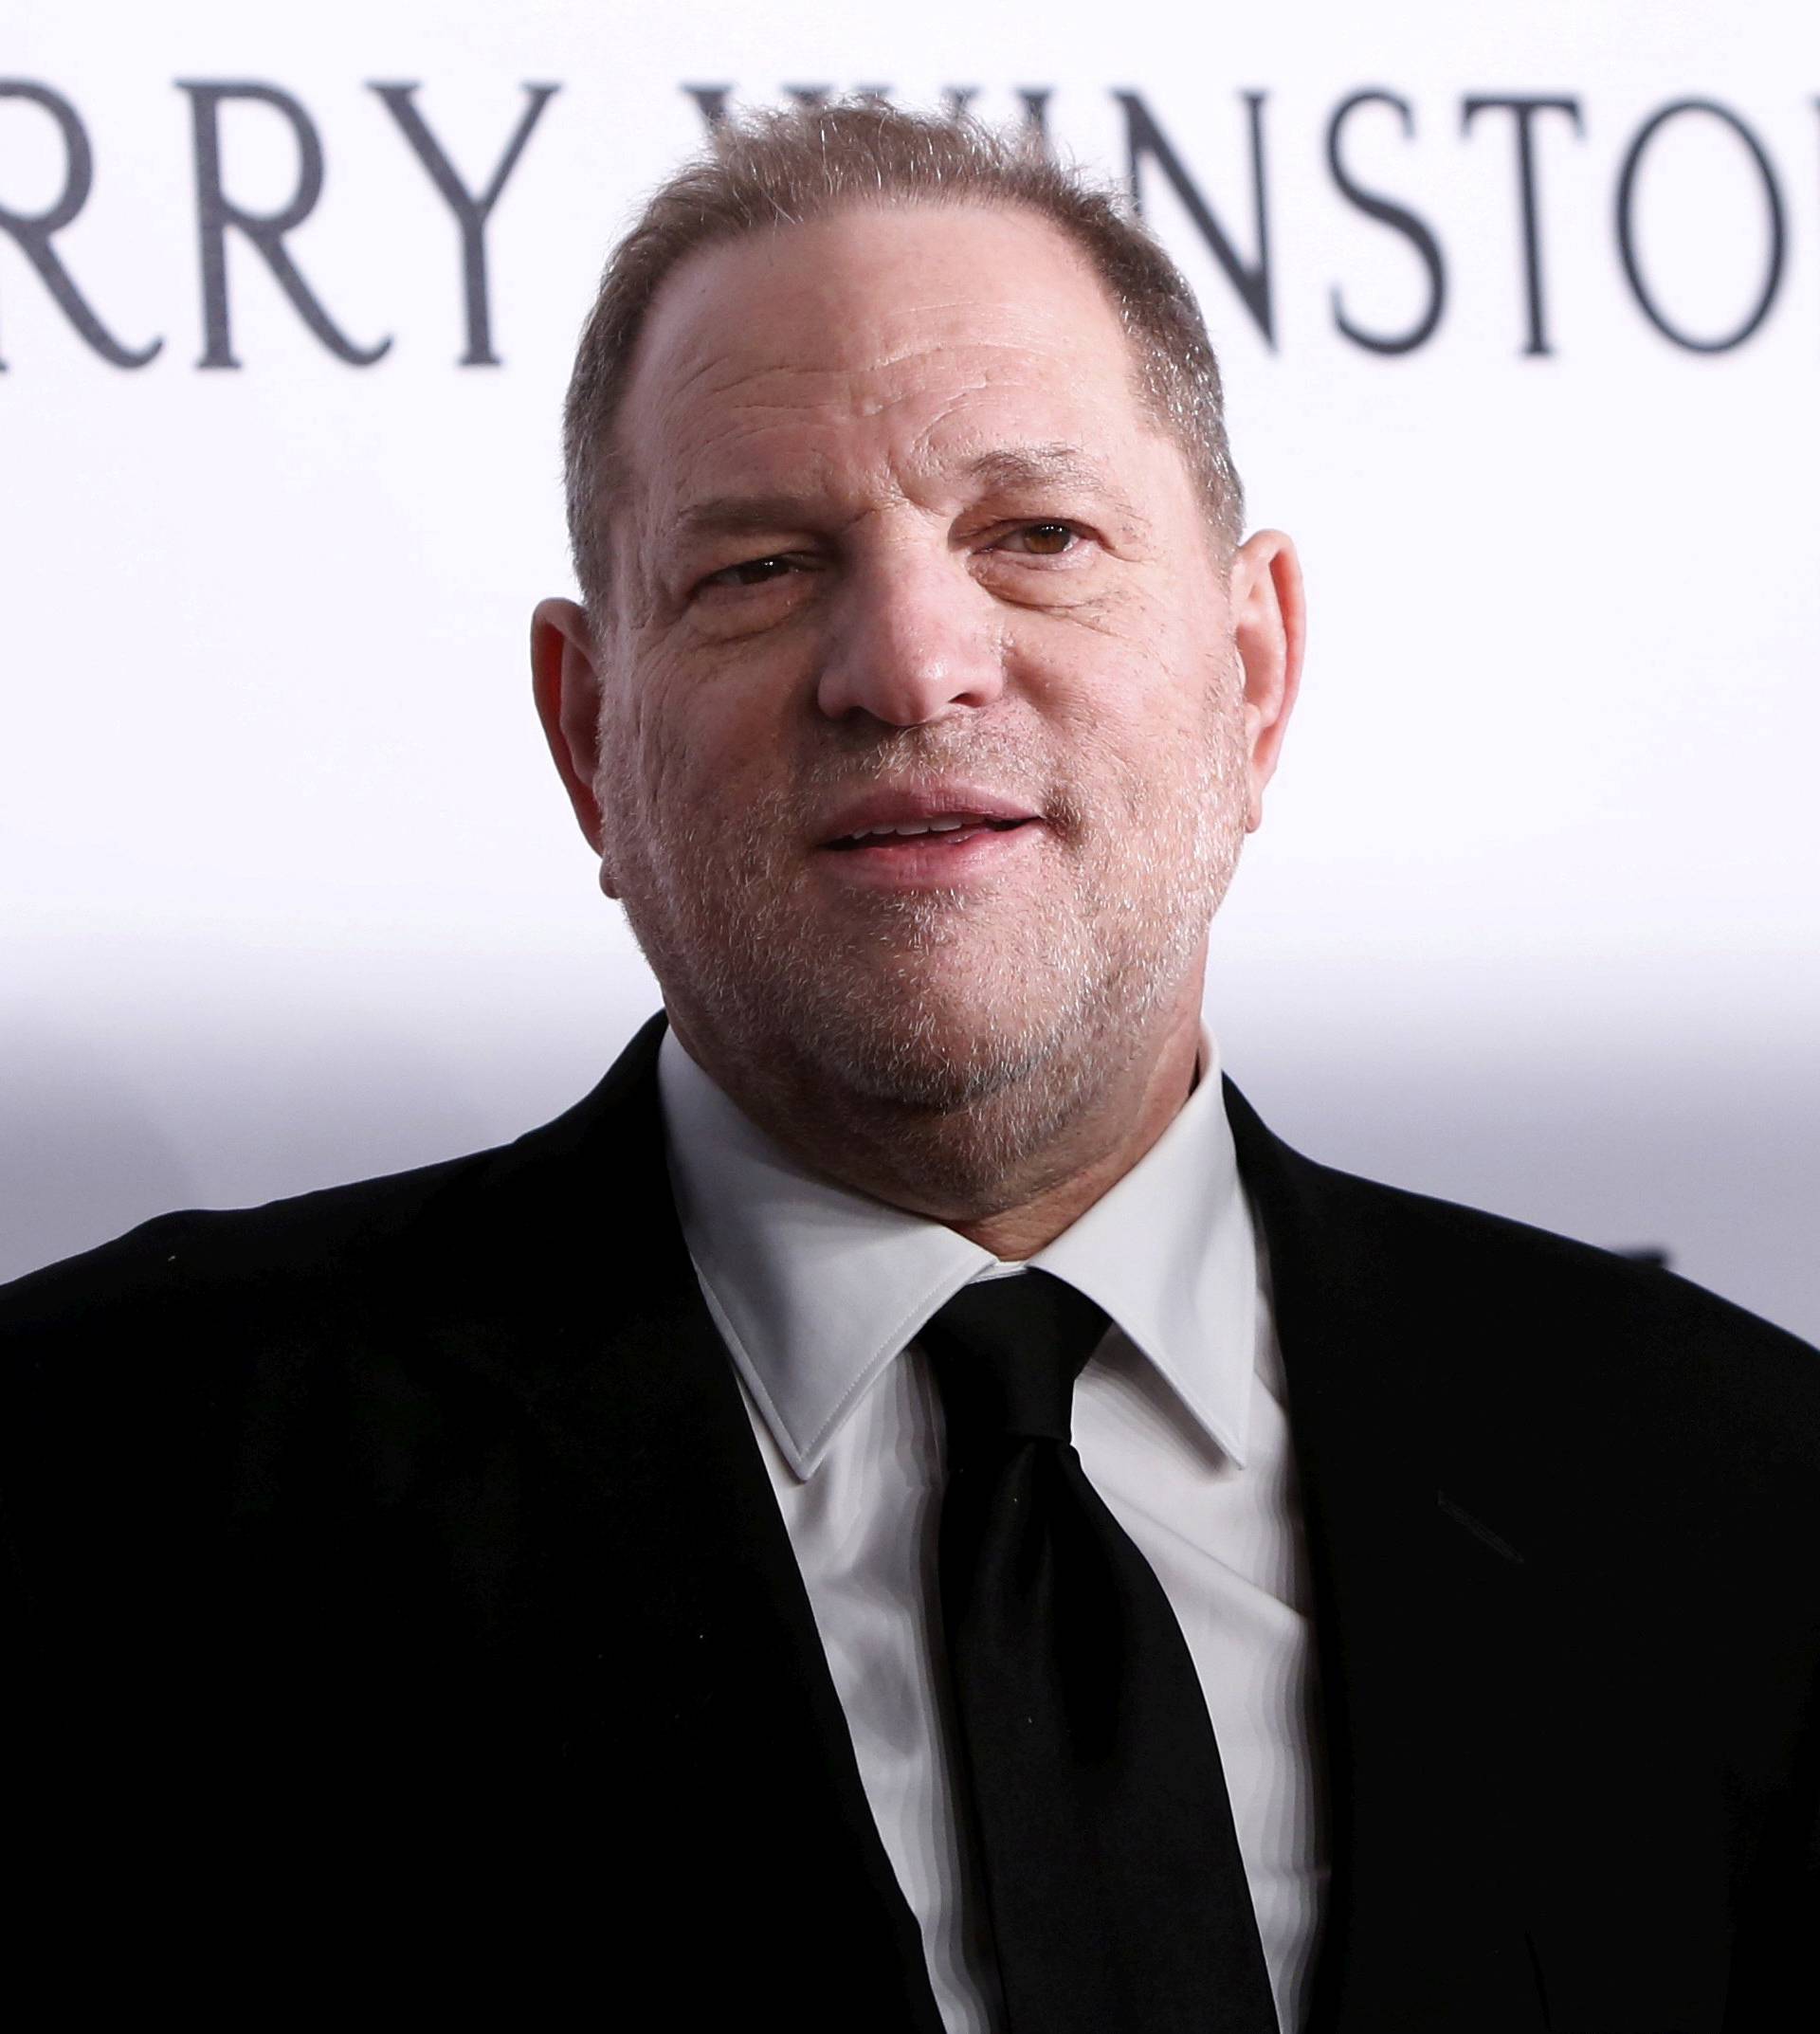 FILE PHOTO: Film producer Harvey Weinstein attends the 2016 amfAR New York Gala at Cipriani Wall Street in Manhattan, New York